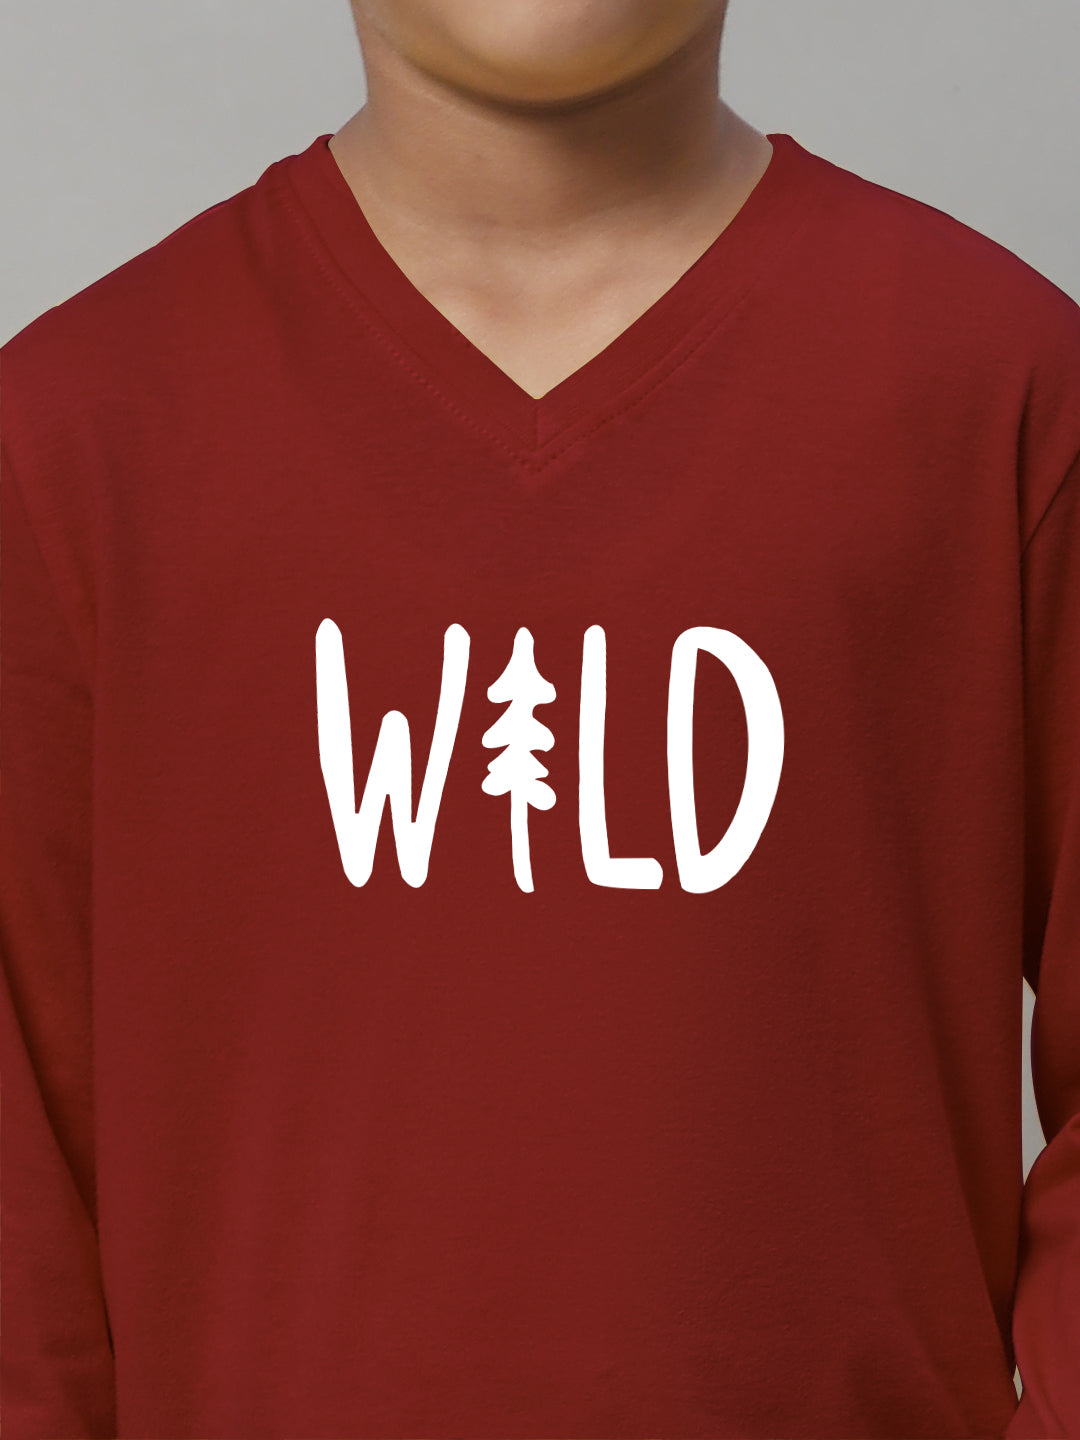 Boys Wild Full Sleeves Printed T-Shirt - Friskers